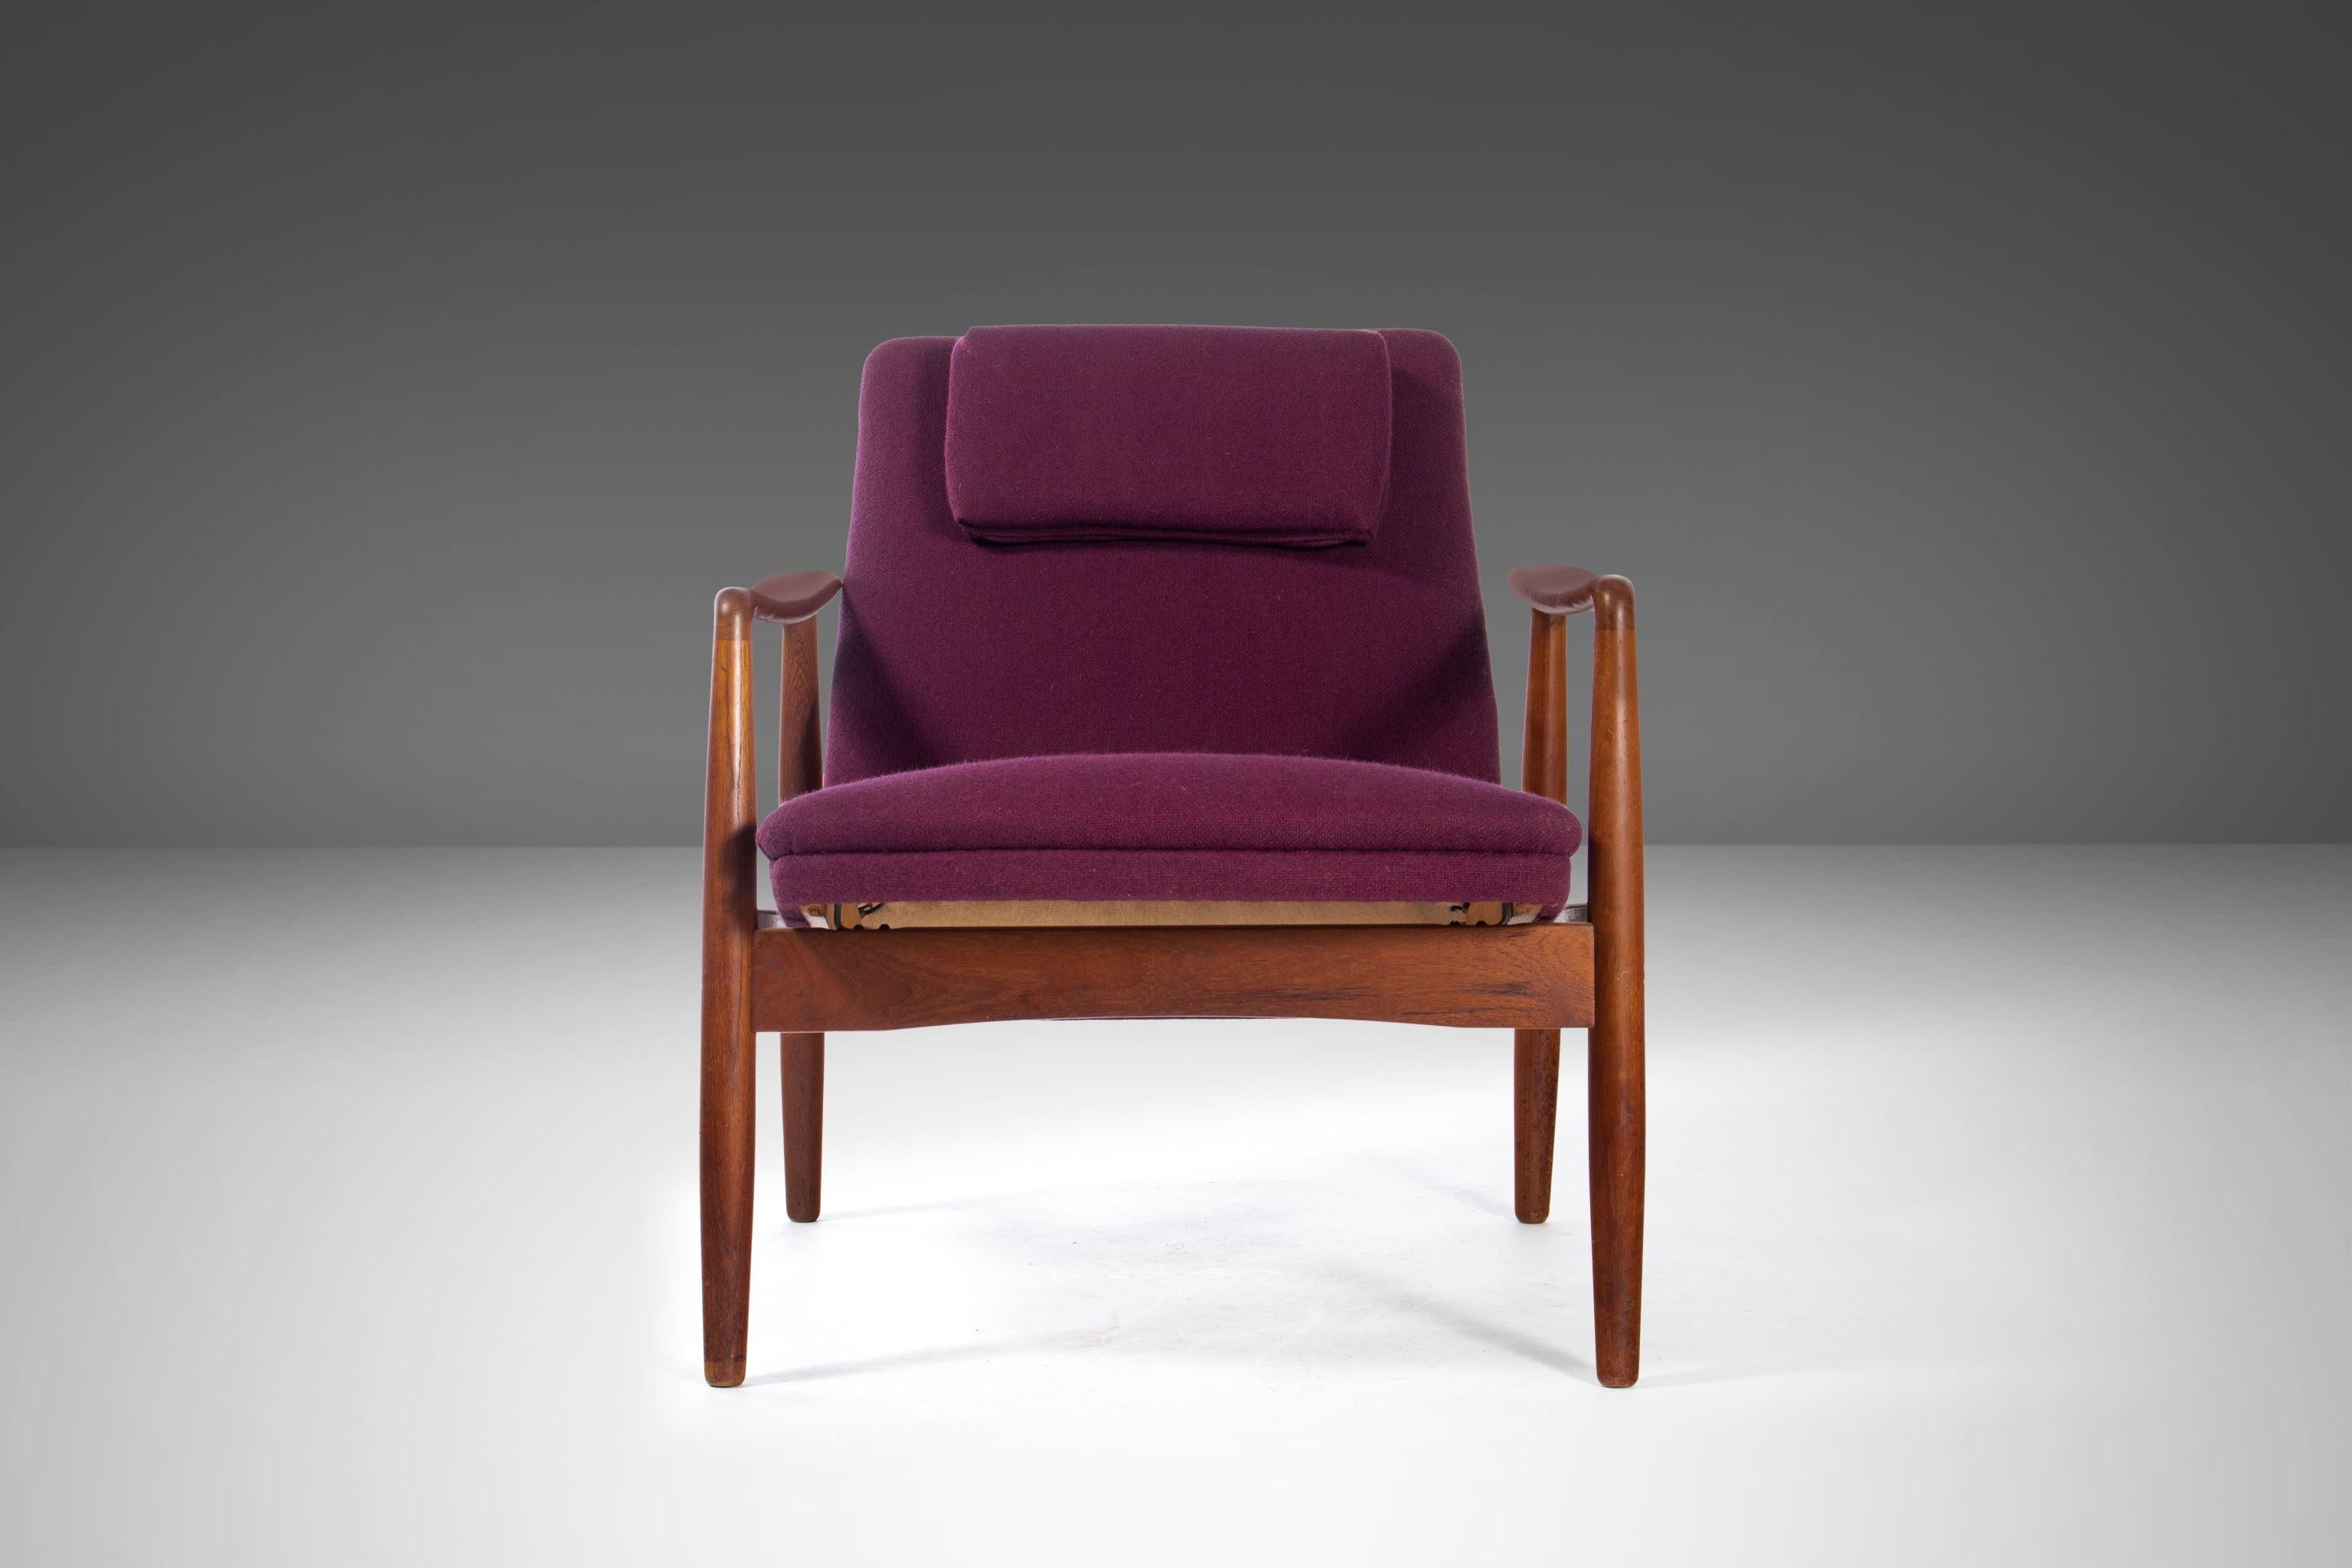 Scandinavian Modern Danish Modern Lounge Chair in Teak Wood by Soren J. Ladefoged, Denmark, c. 1950s For Sale